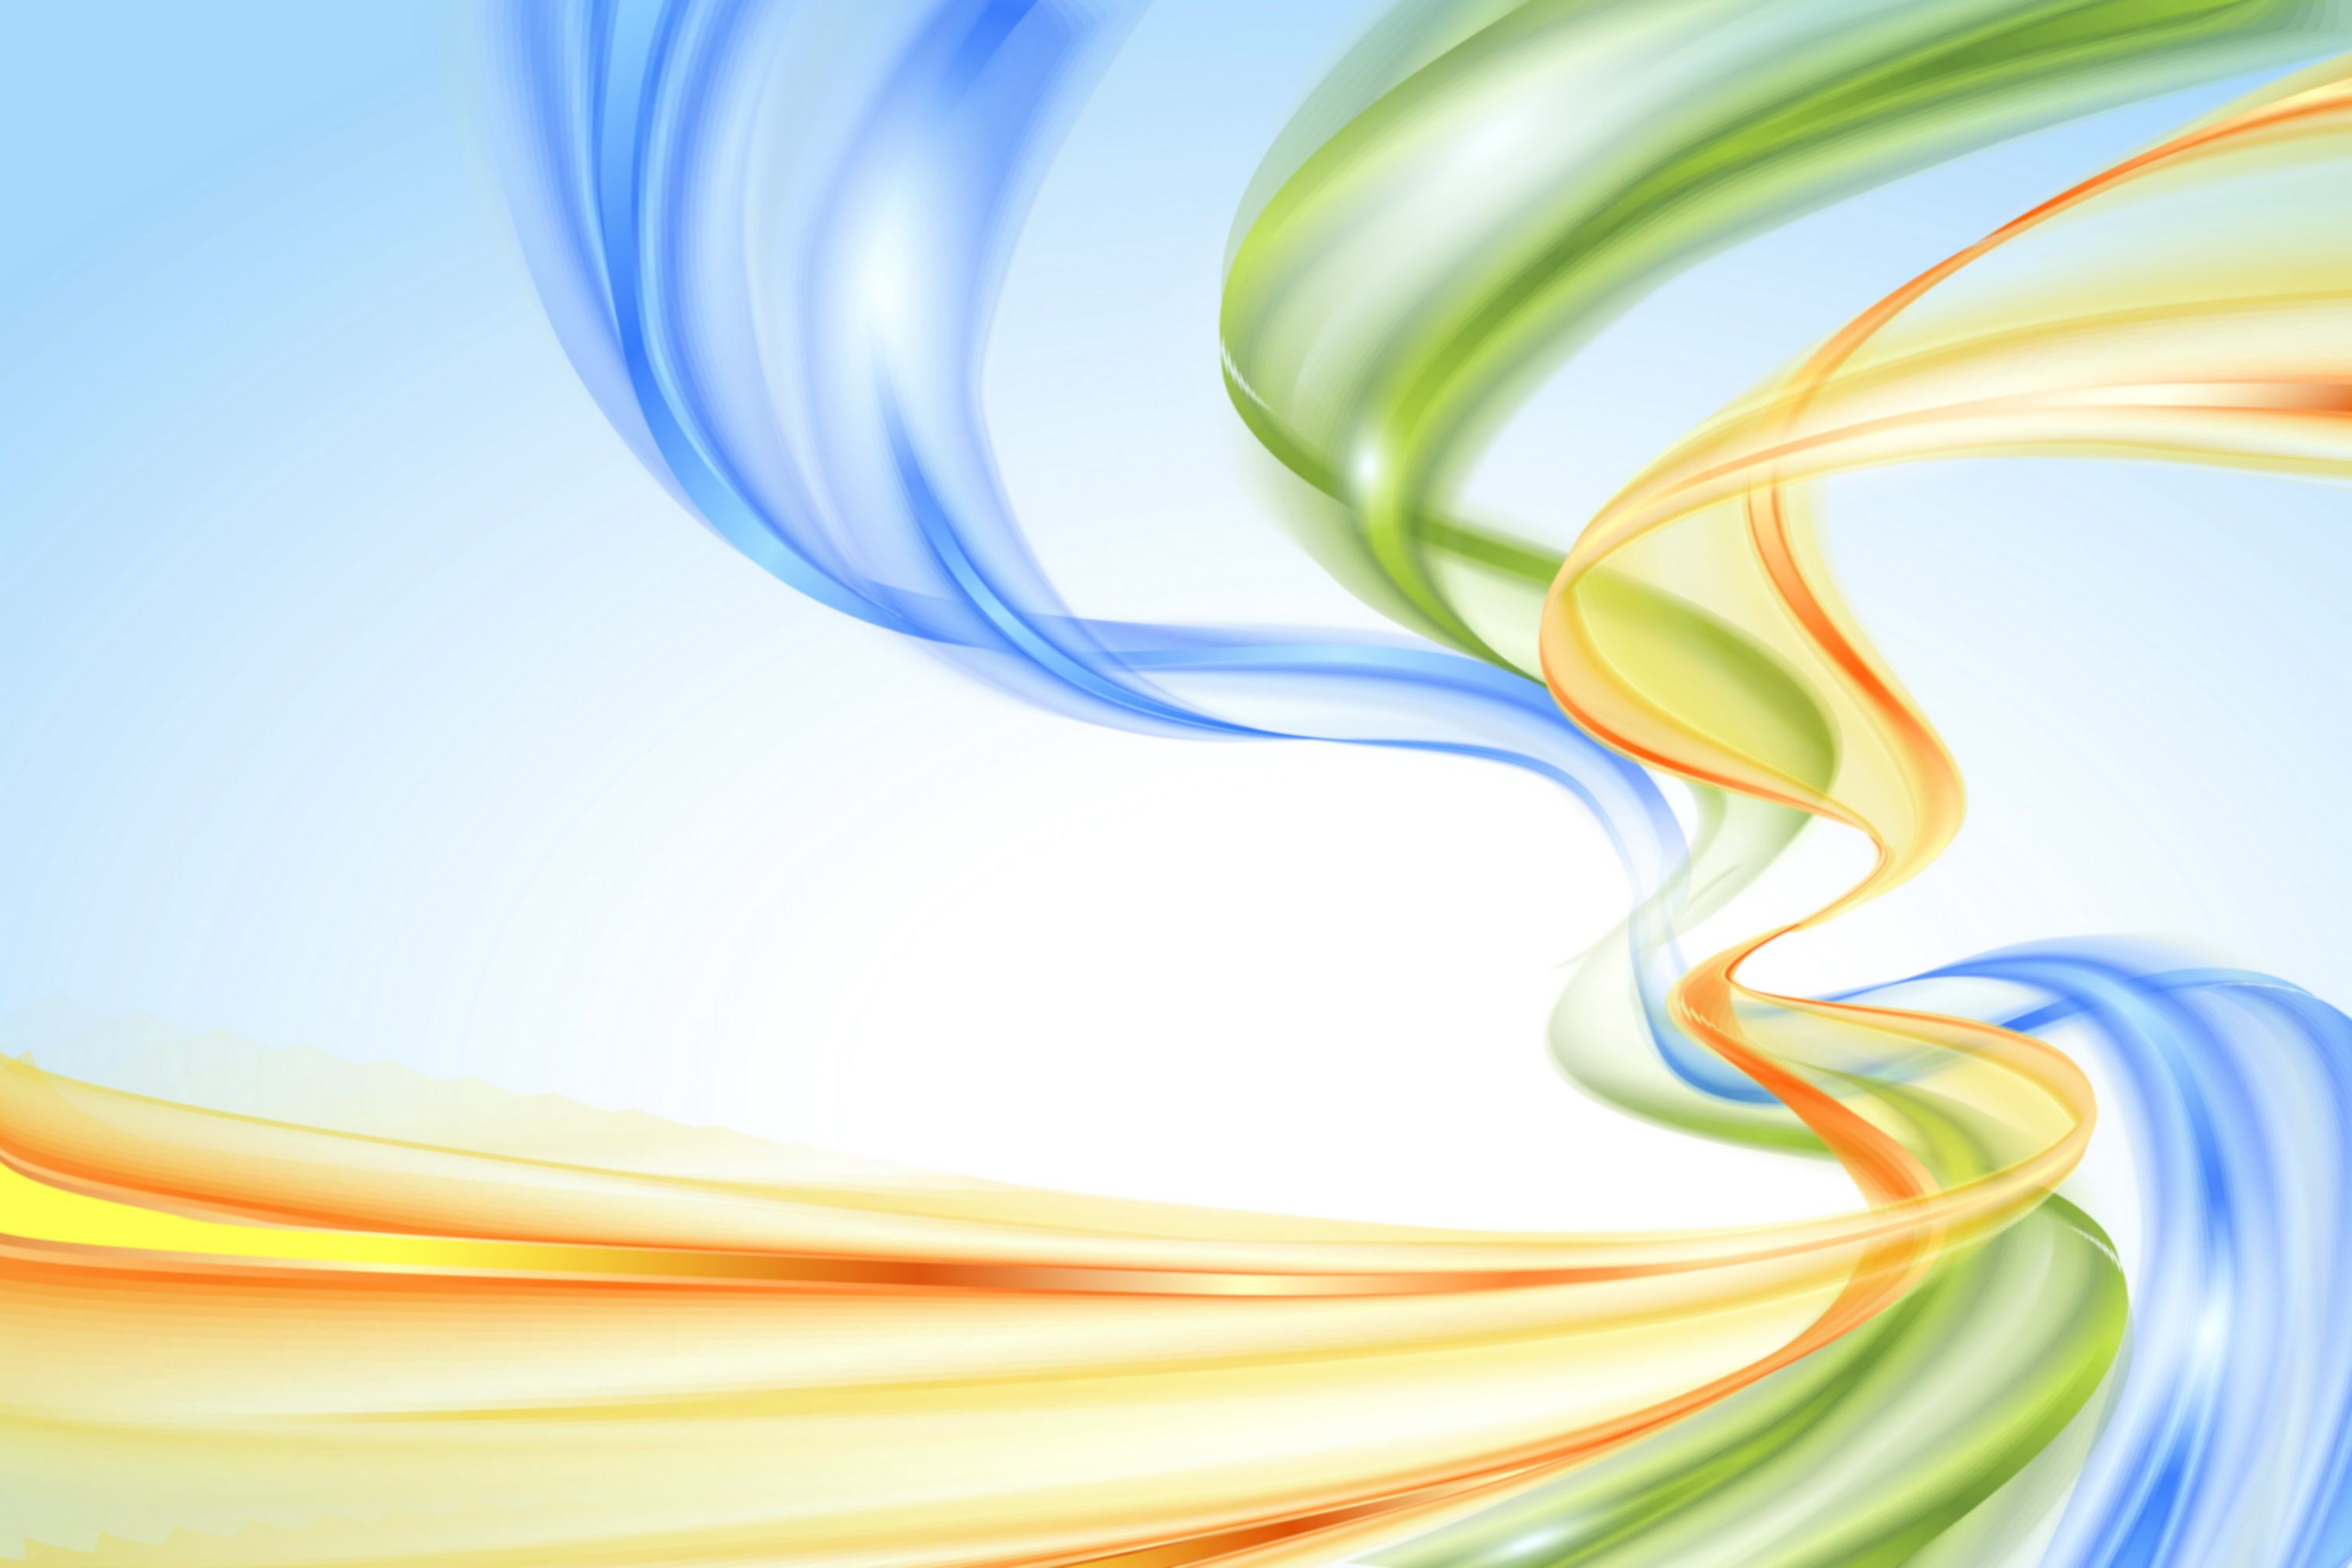 #Vertical, #Orange, #Blue, #Colorful, #Waves, #Green. Mocah.org HD Desktop Wallpaper